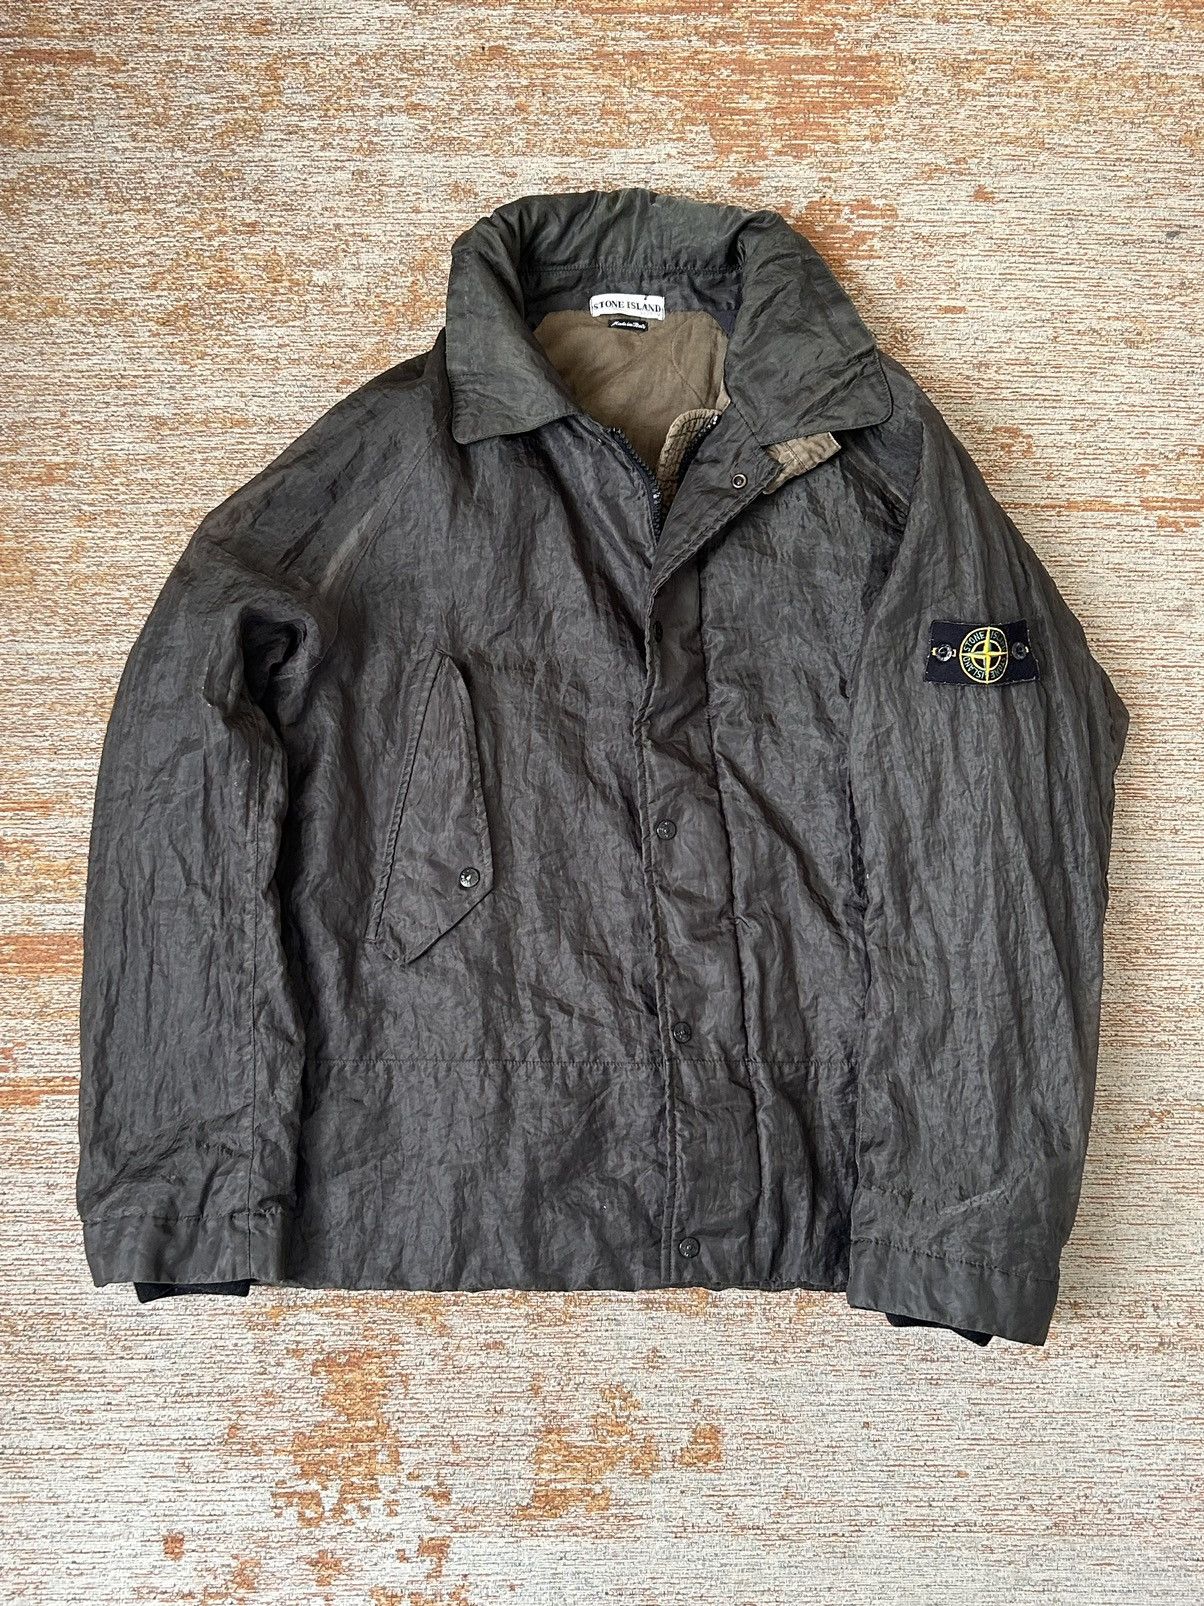 Stone Island C.P. Company u16 1997 PVC jacket | Grailed